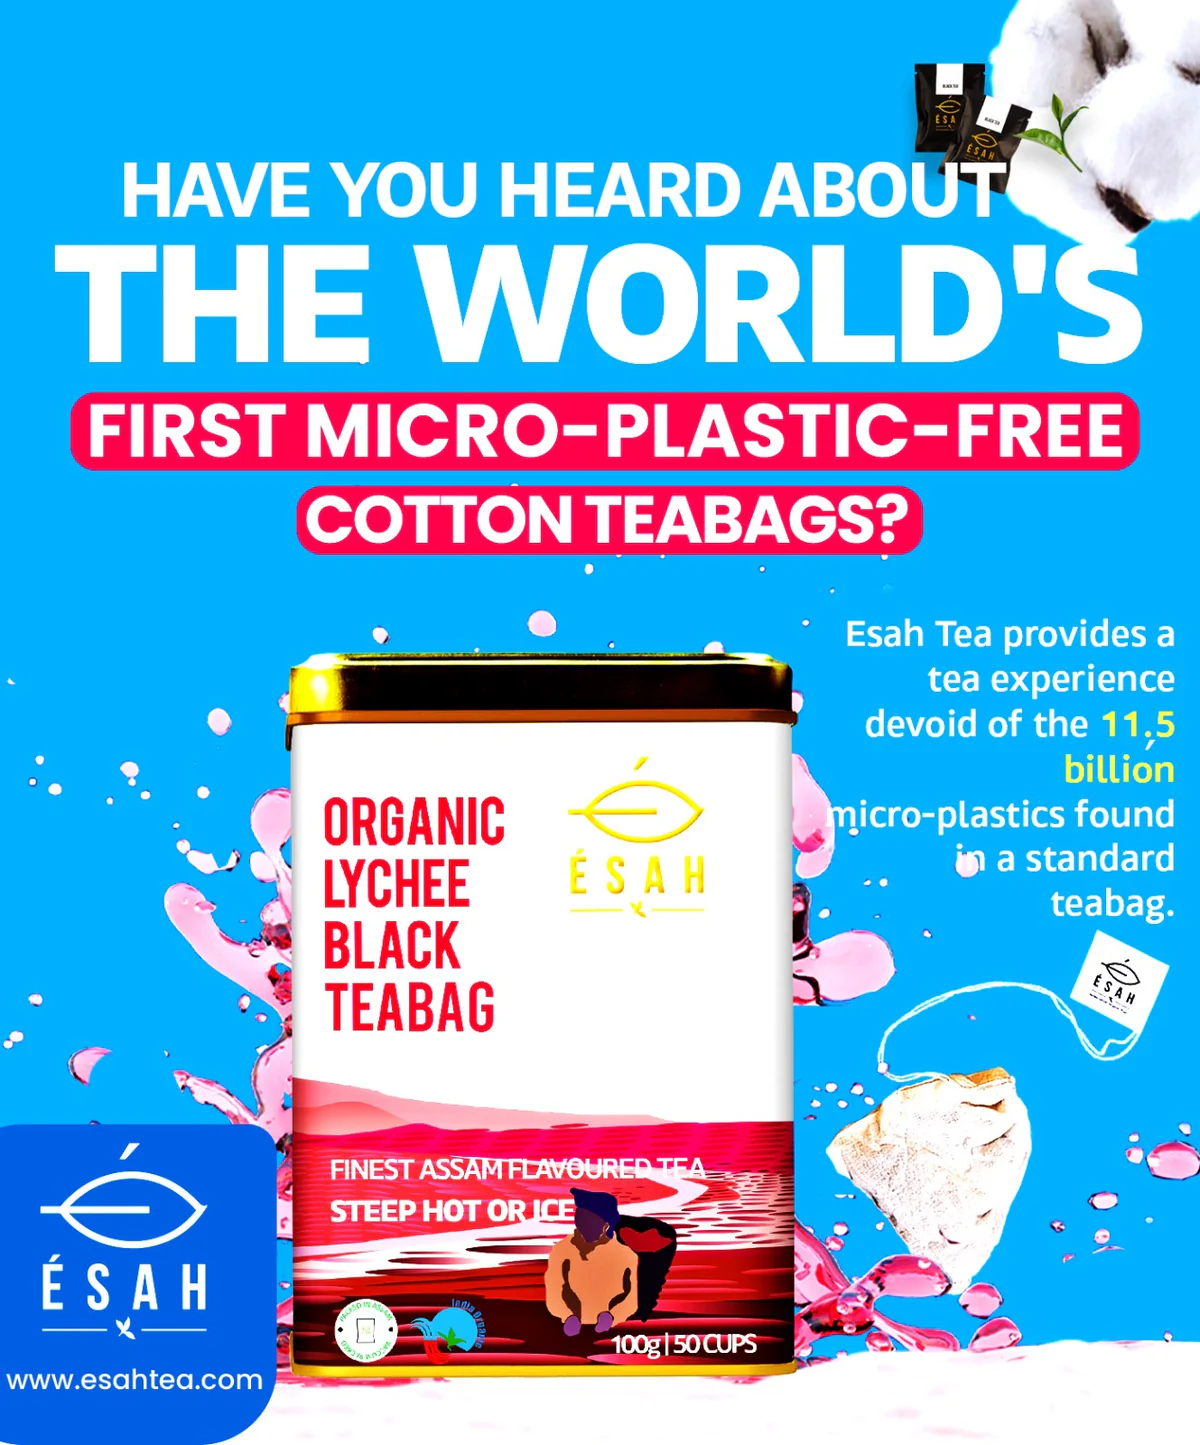 Esah Tea introduces microplastic-free cotton tea bags